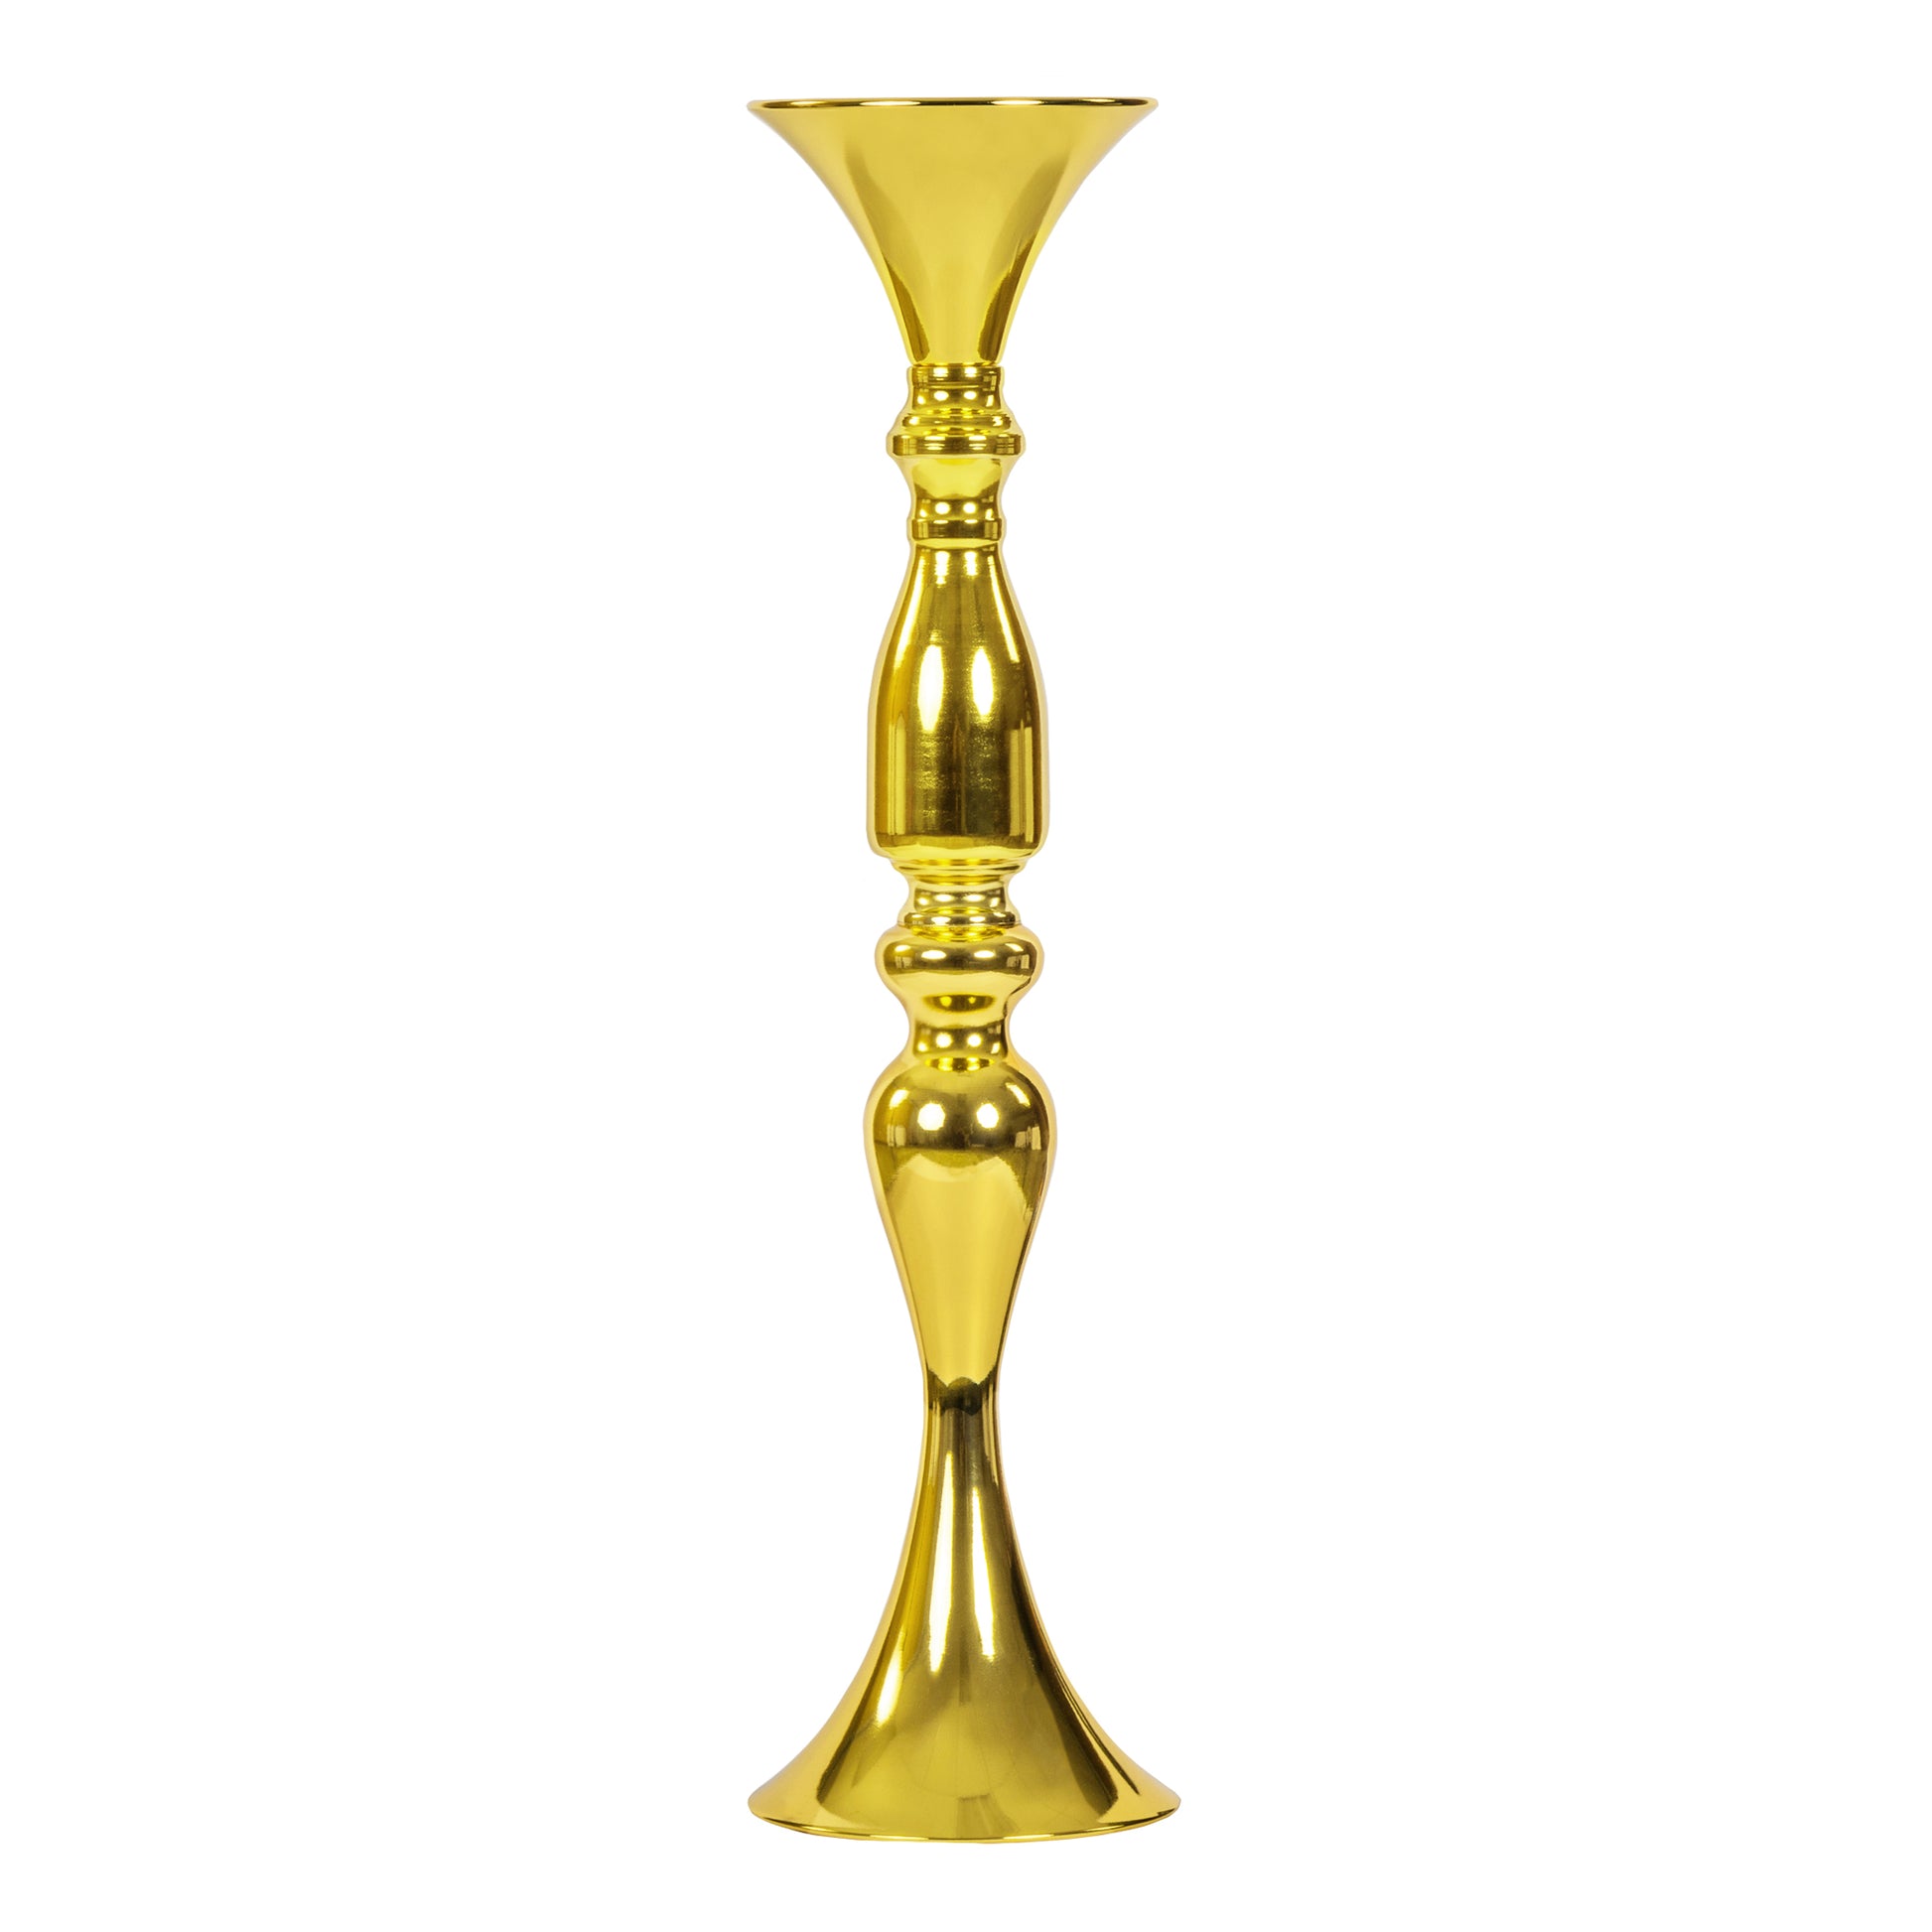 Flower Vase Riser Holder Centerpiece Stand 20"H - Gold - CV Linens